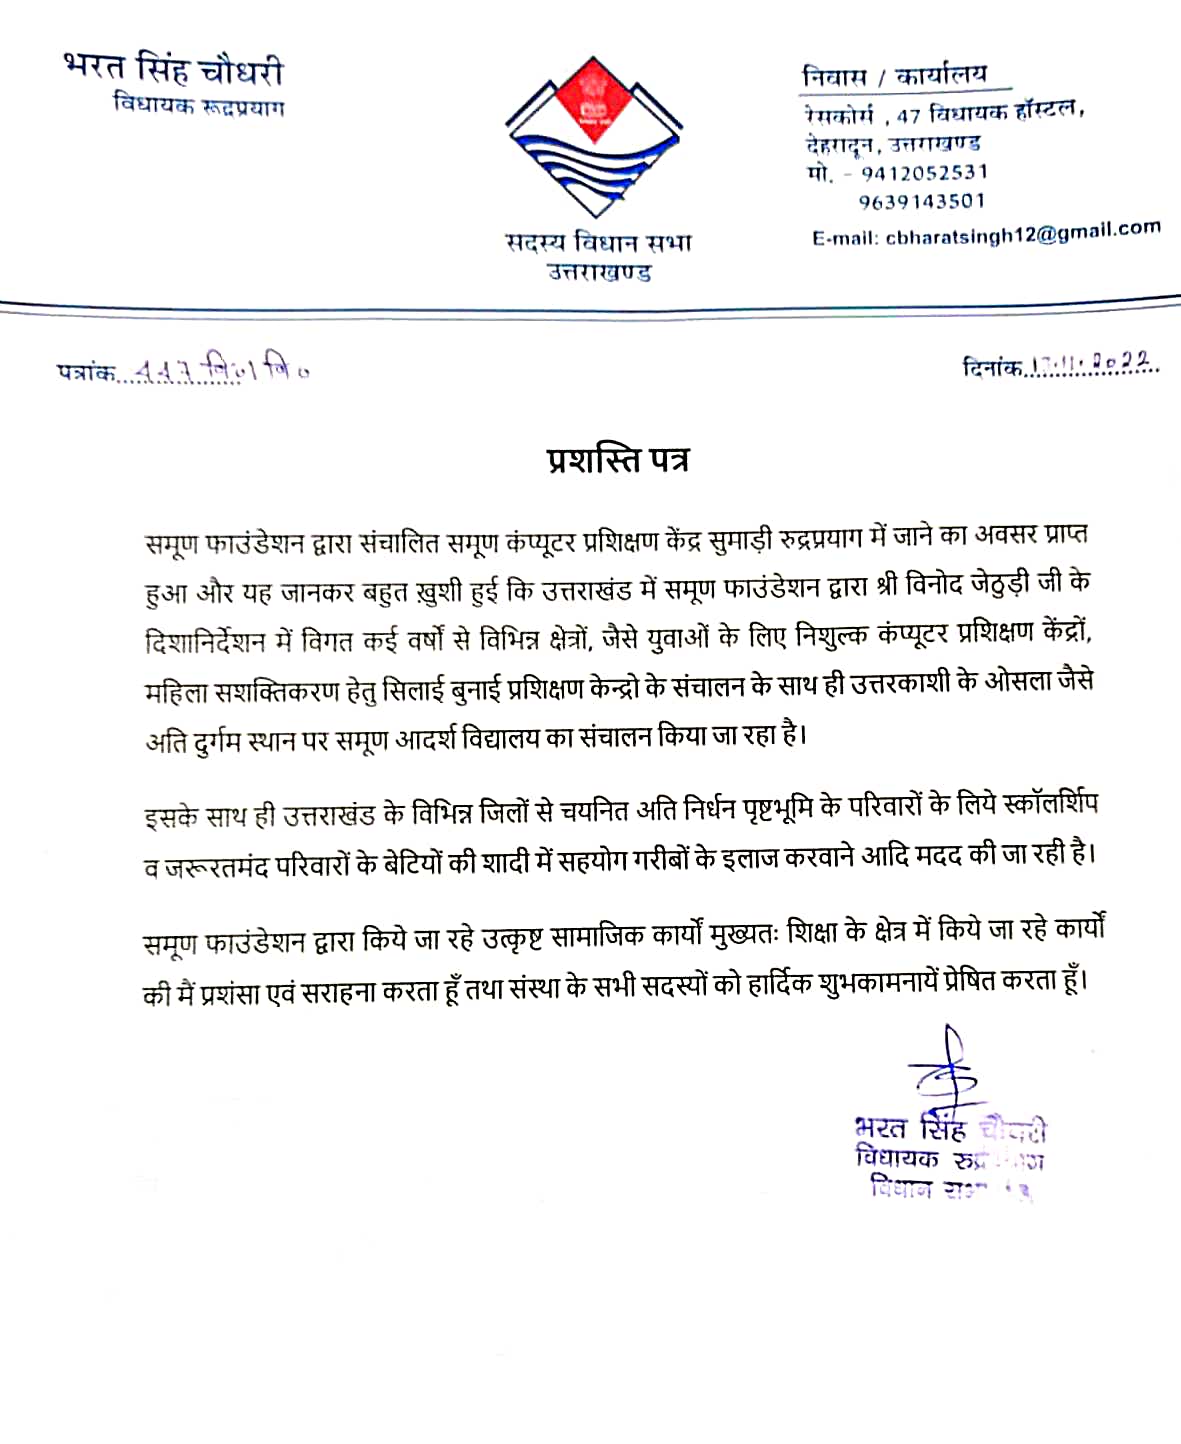 Citation Letter from Bharat Singh Chaudhary - MLA, Rudraprayag (Uttrakhand)